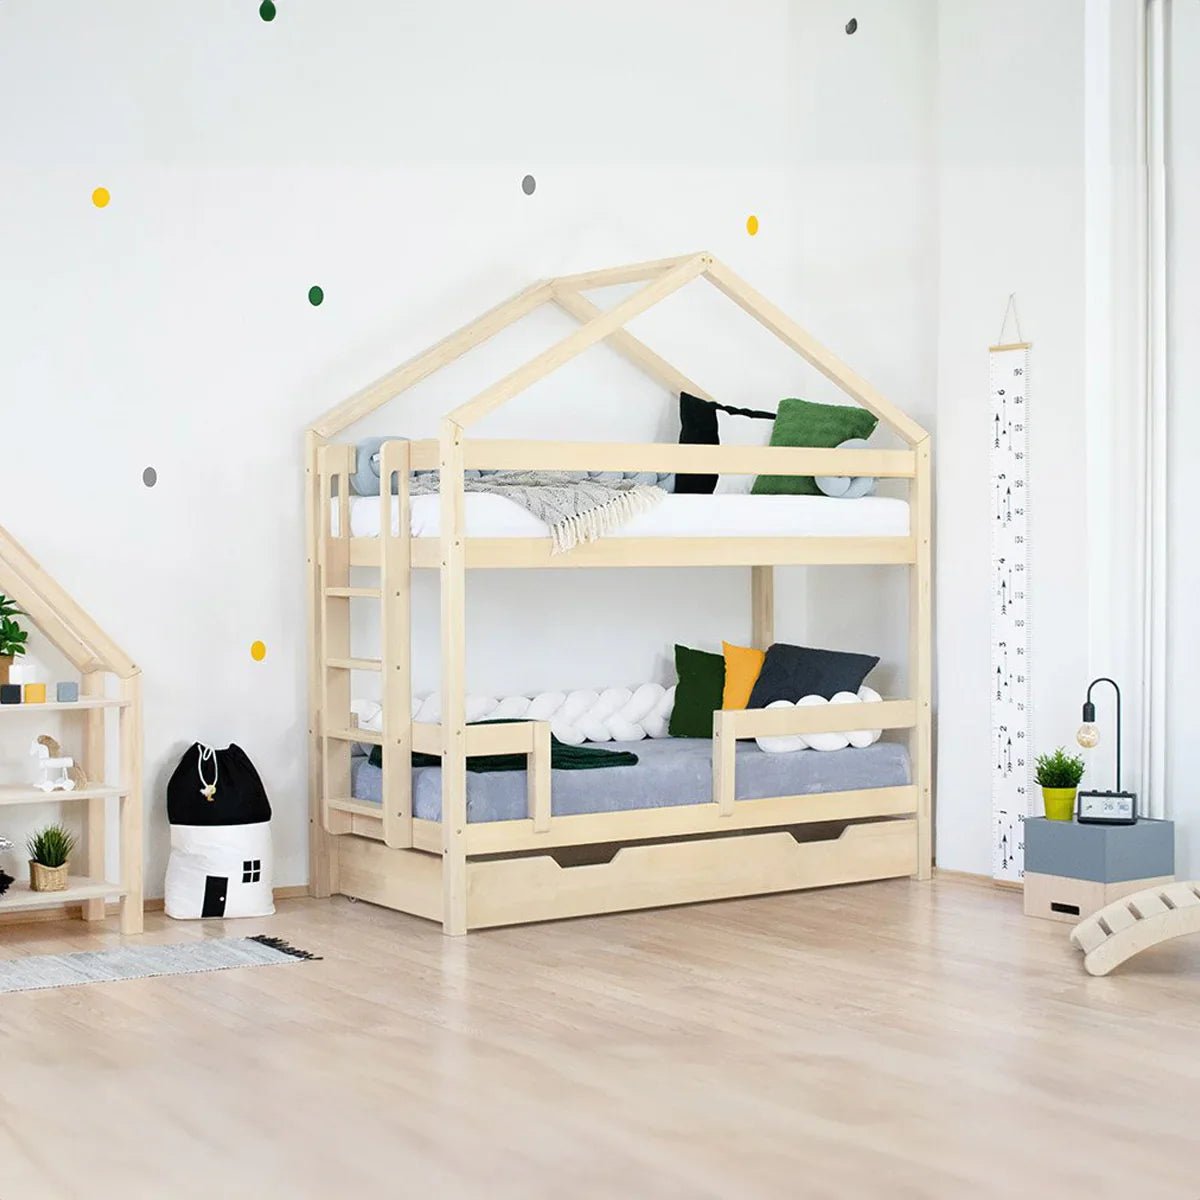 Wooden Children's House Bunk Bed KILI - Natural